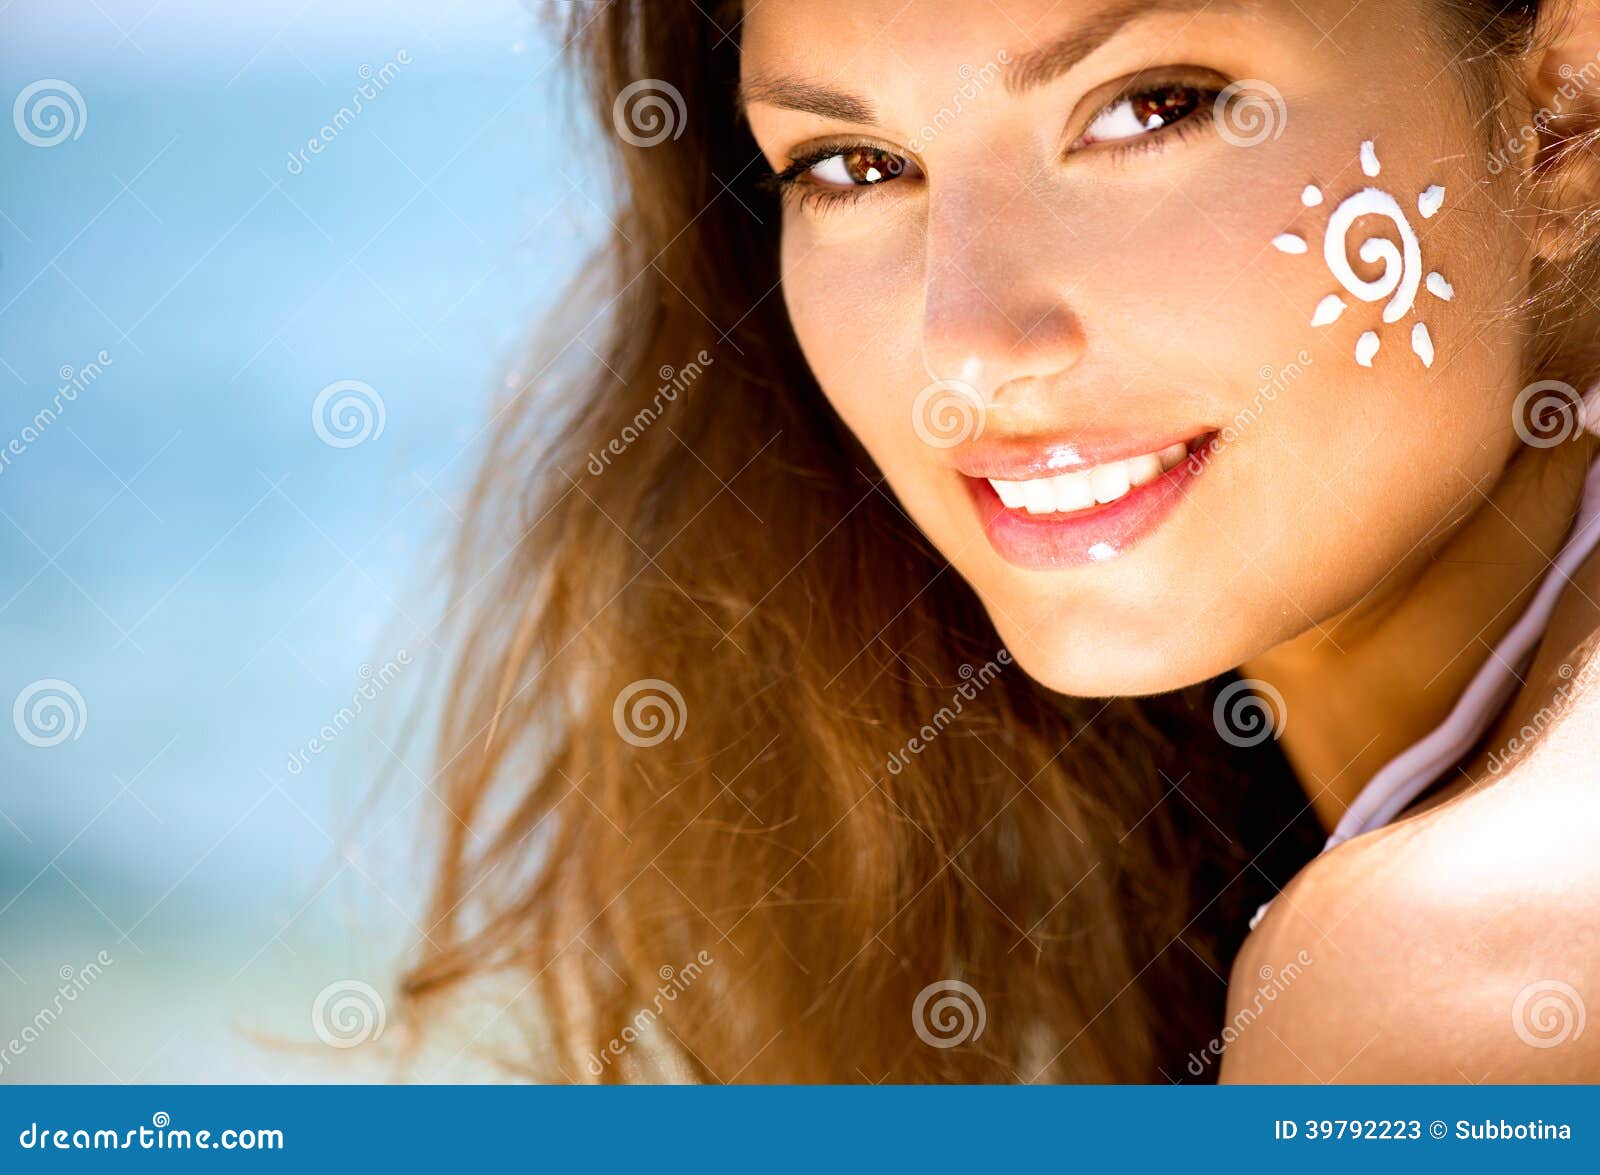 beauty girl with sun tan cream on her face